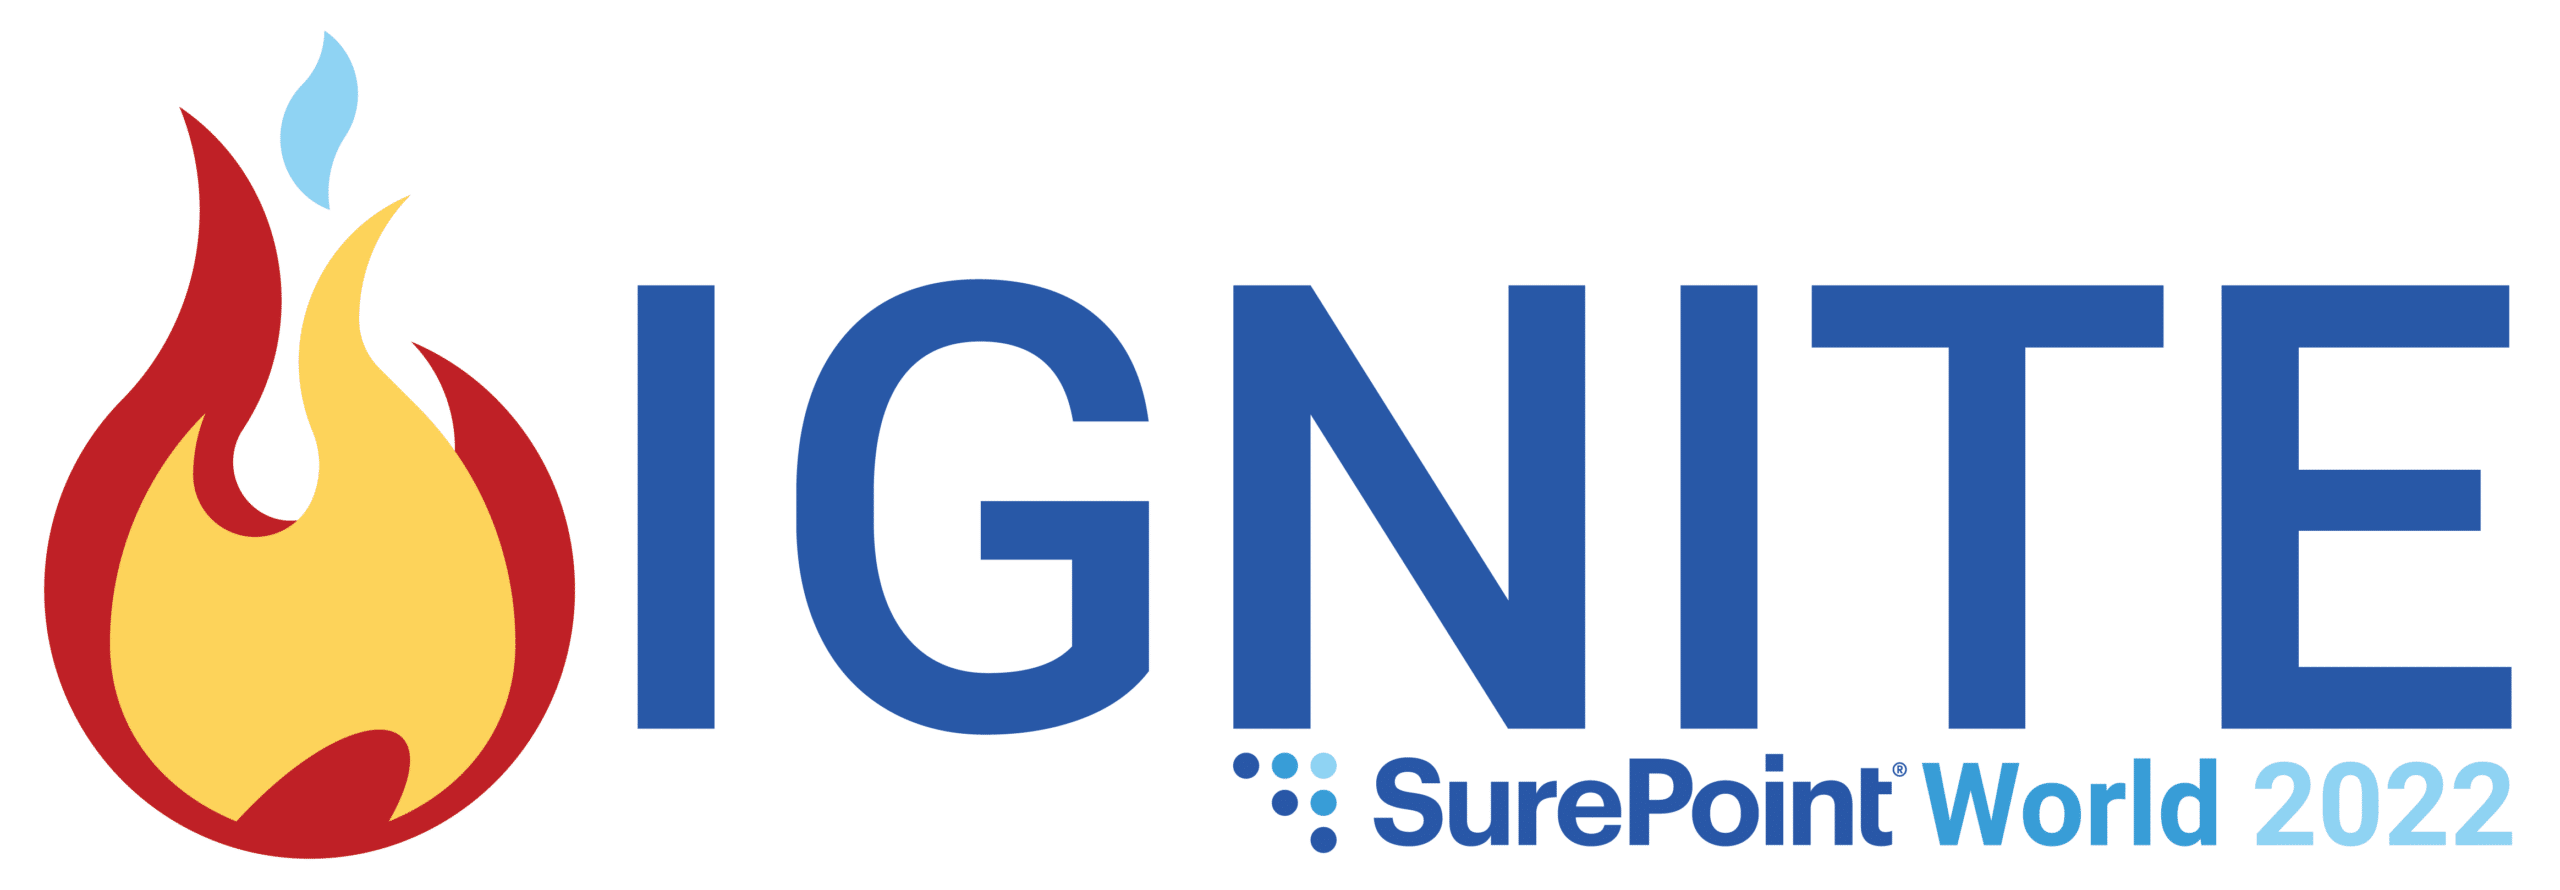 ignite surepoint logo